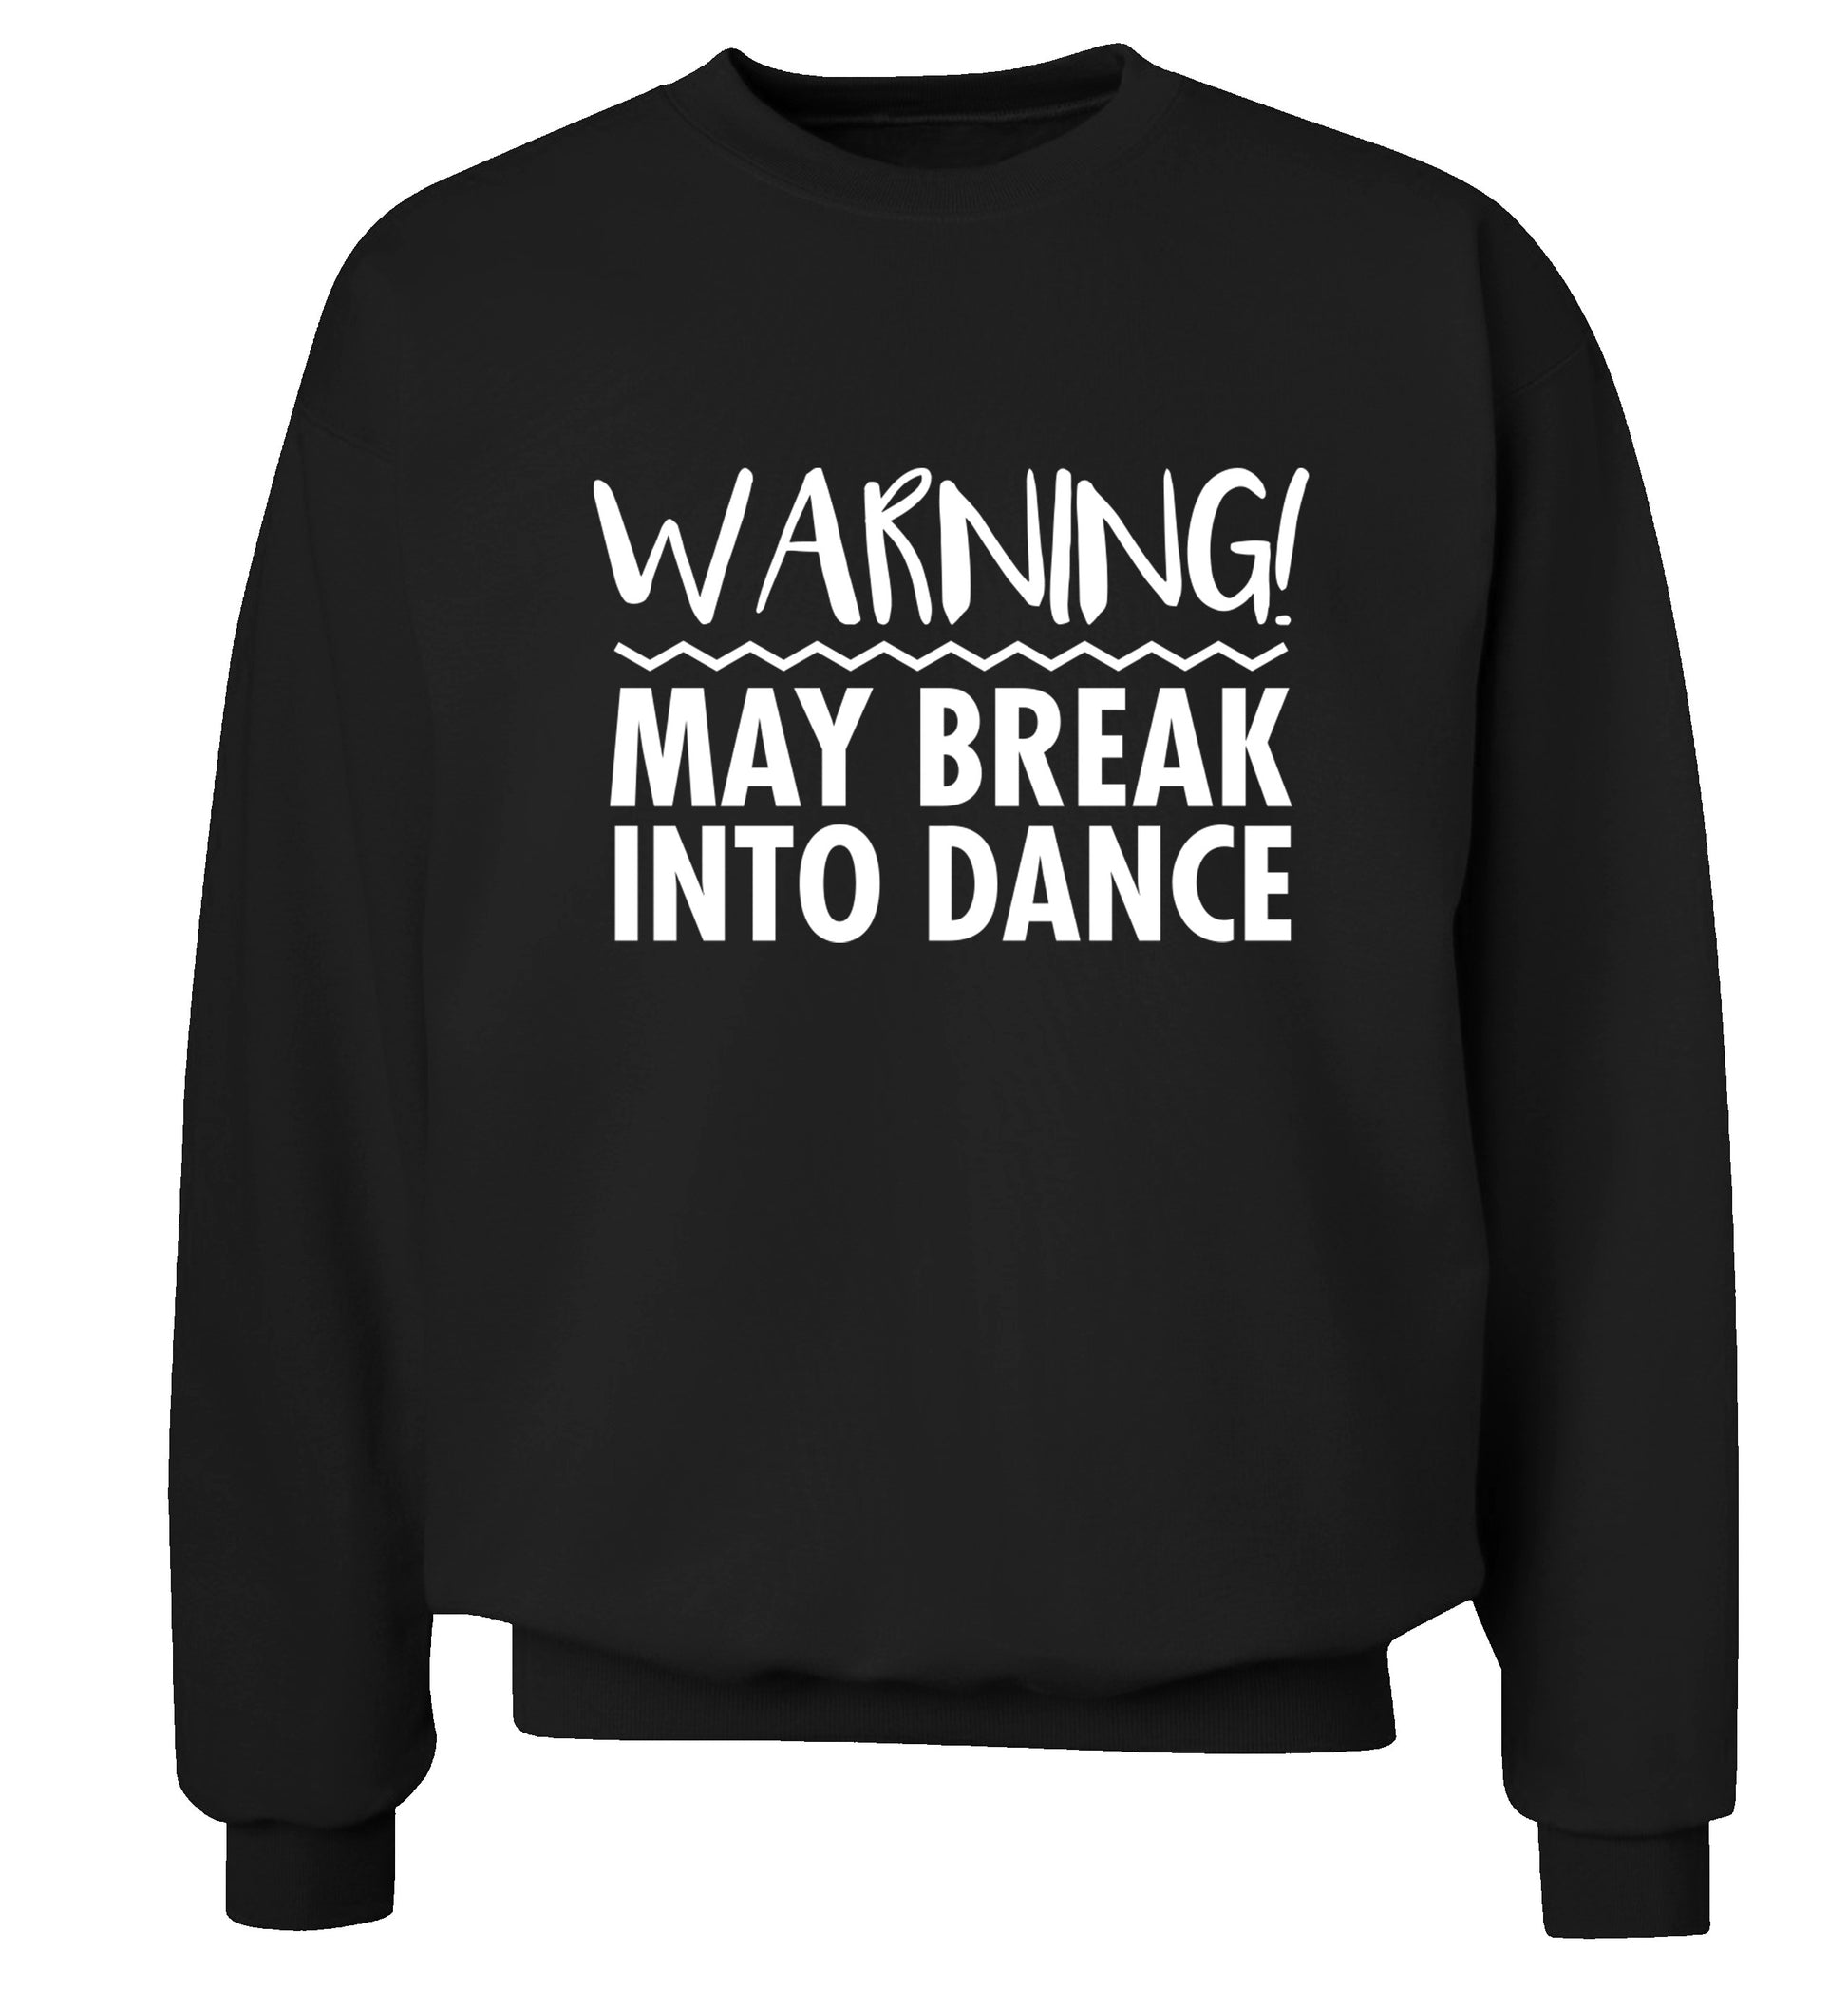 Warning may break into dance Adult's unisex black Sweater 2XL